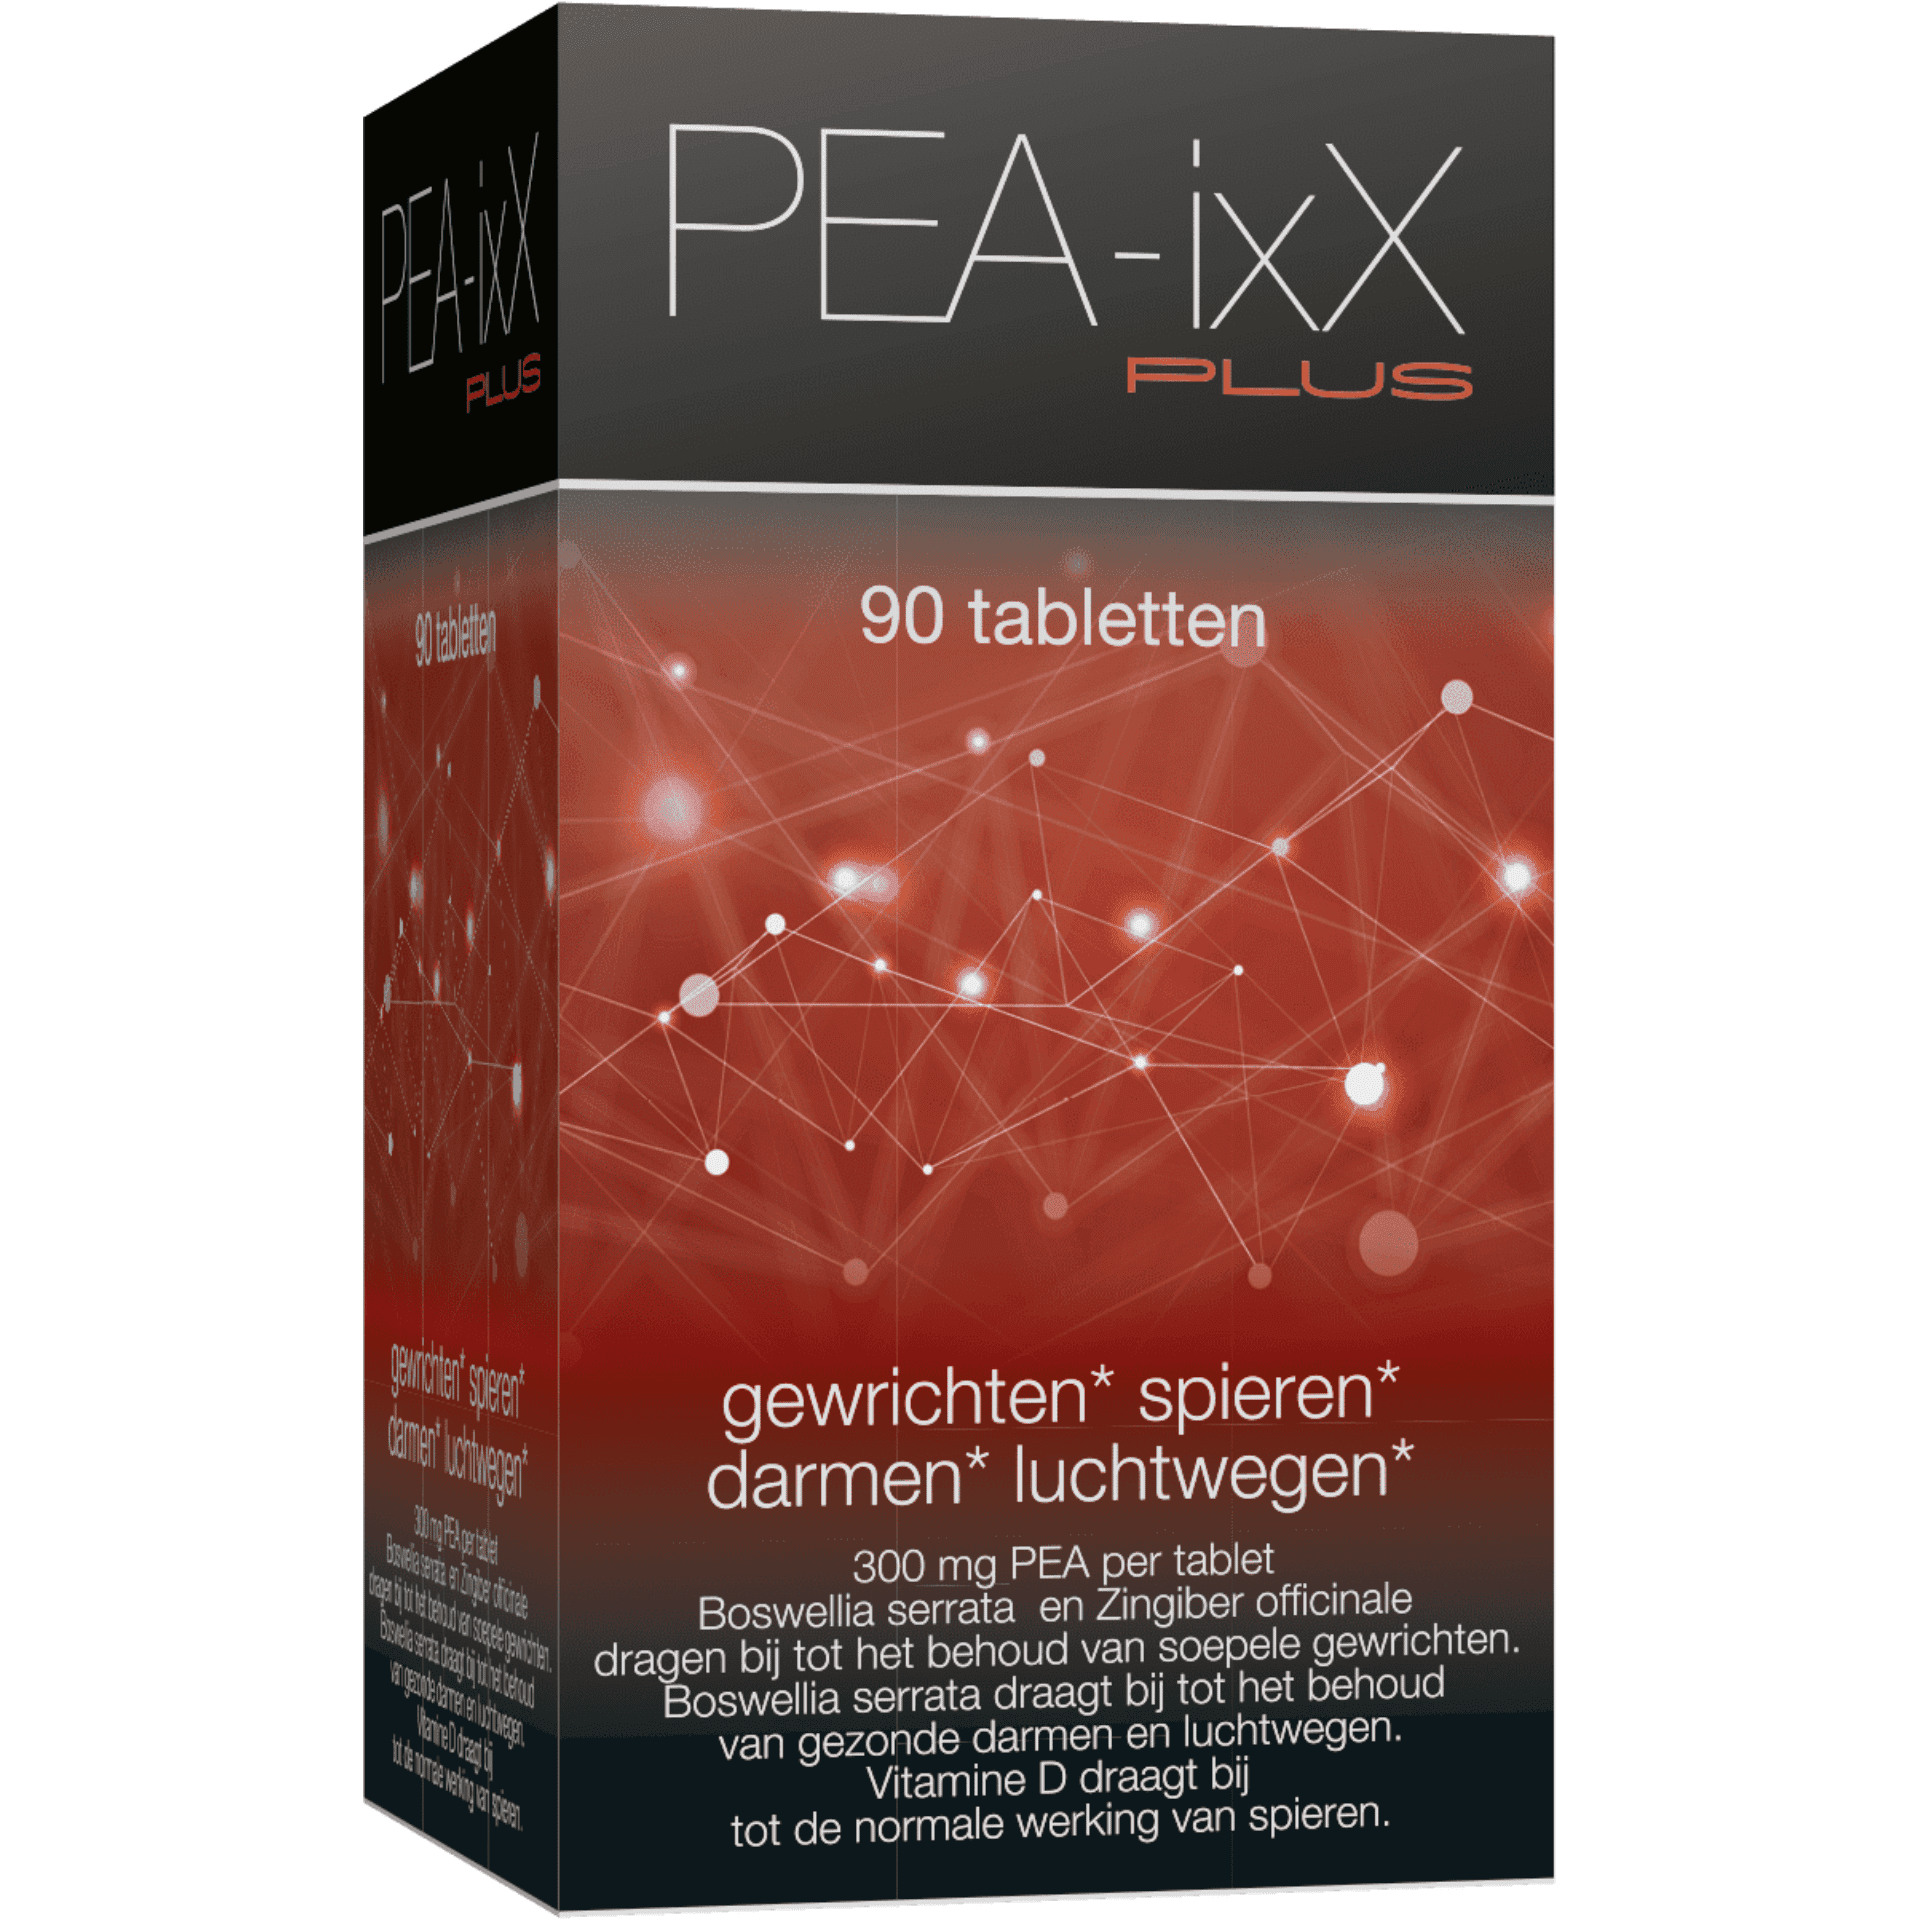 PEA-ixX Plus 90 tabletten